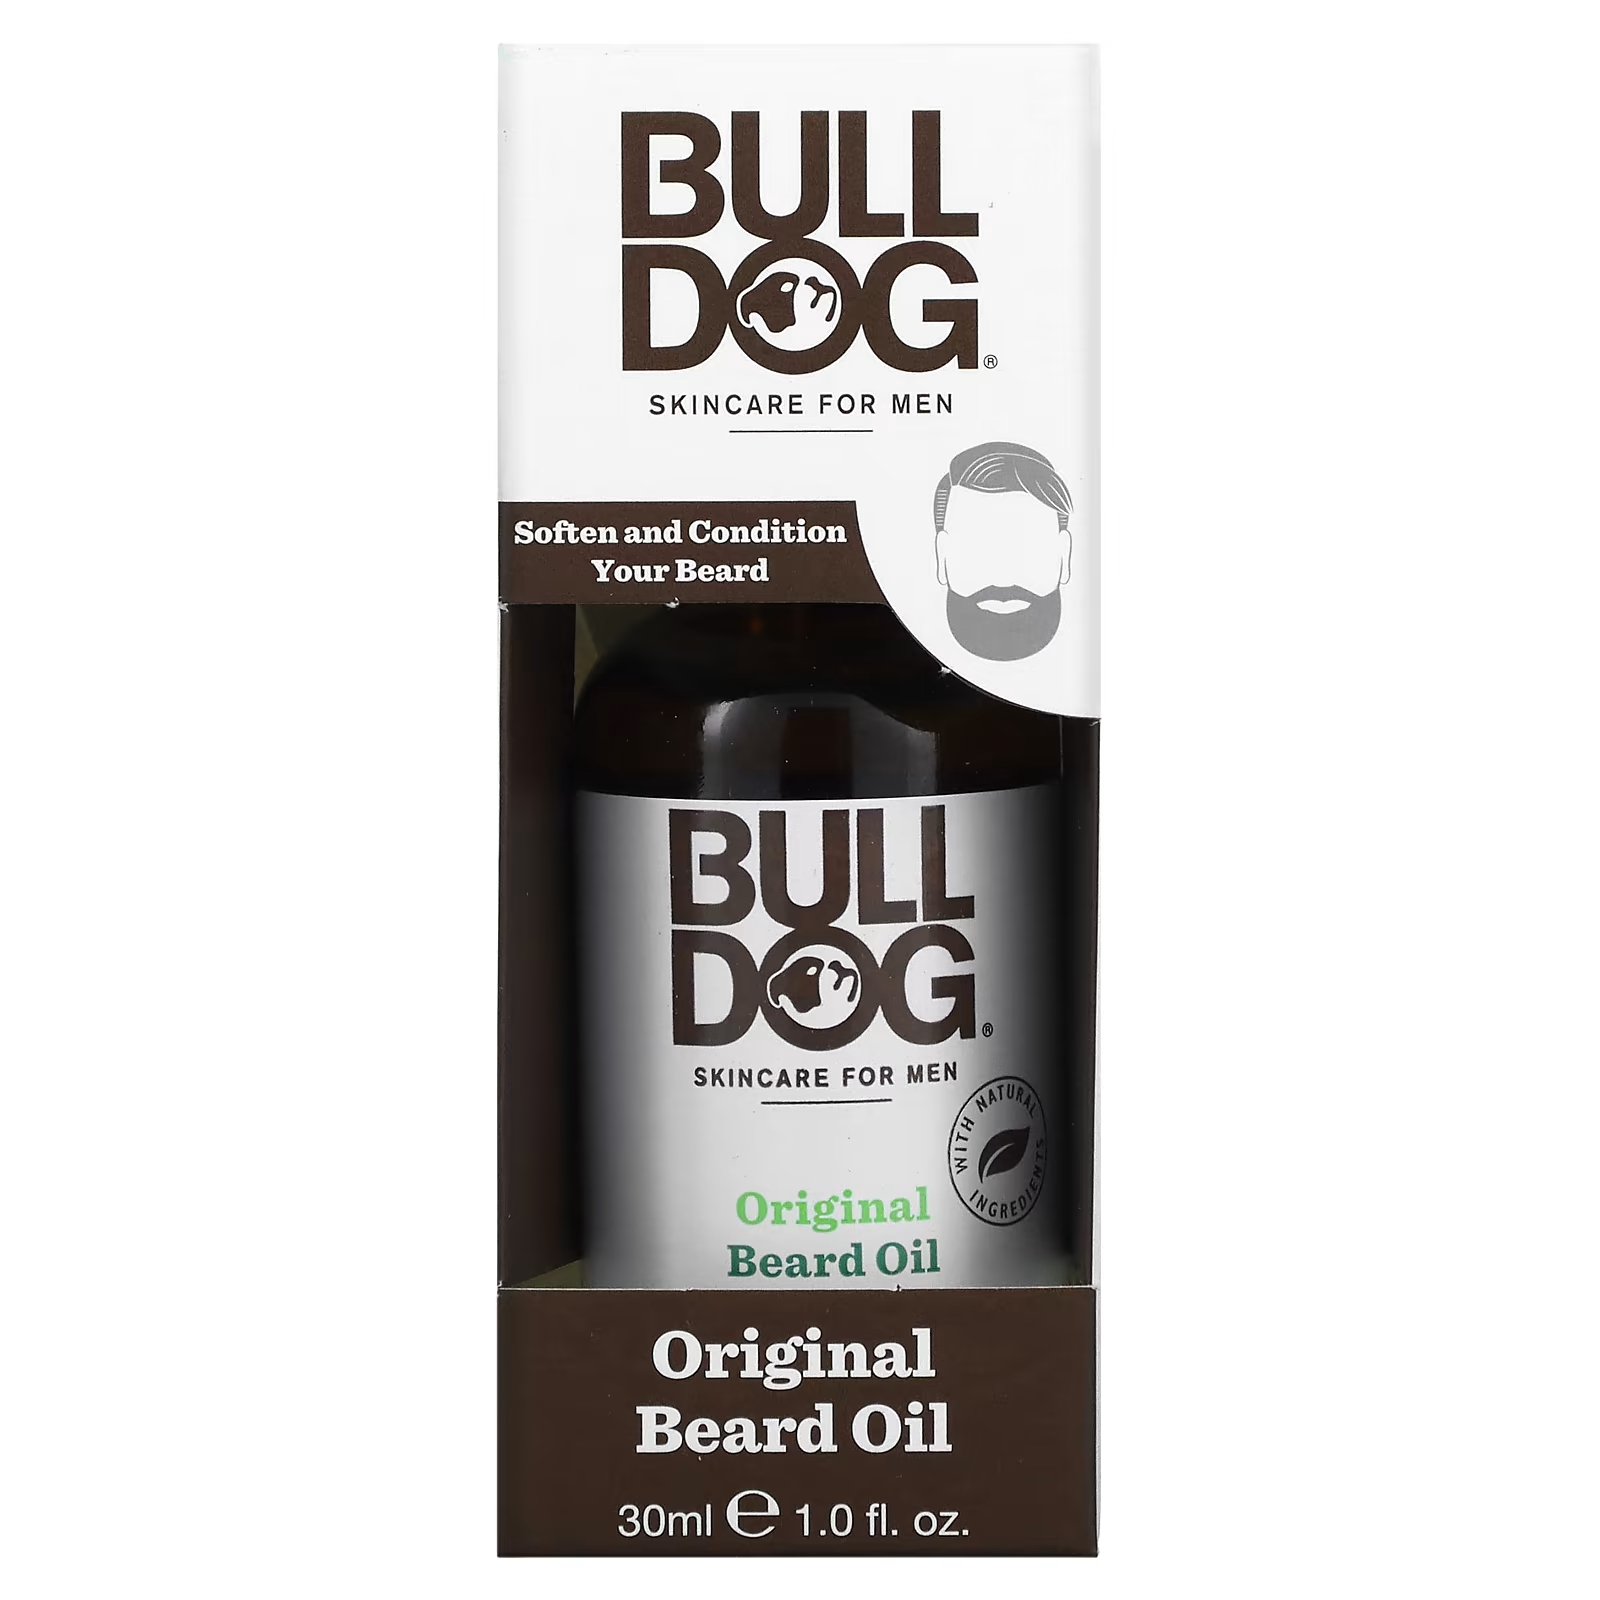 Bulldog Skincare For Men, оригинальное масло для бороды, 30 мл bulldog skincare for men оригинальный гель для бритья 1 0 жидкая унция 30 мл